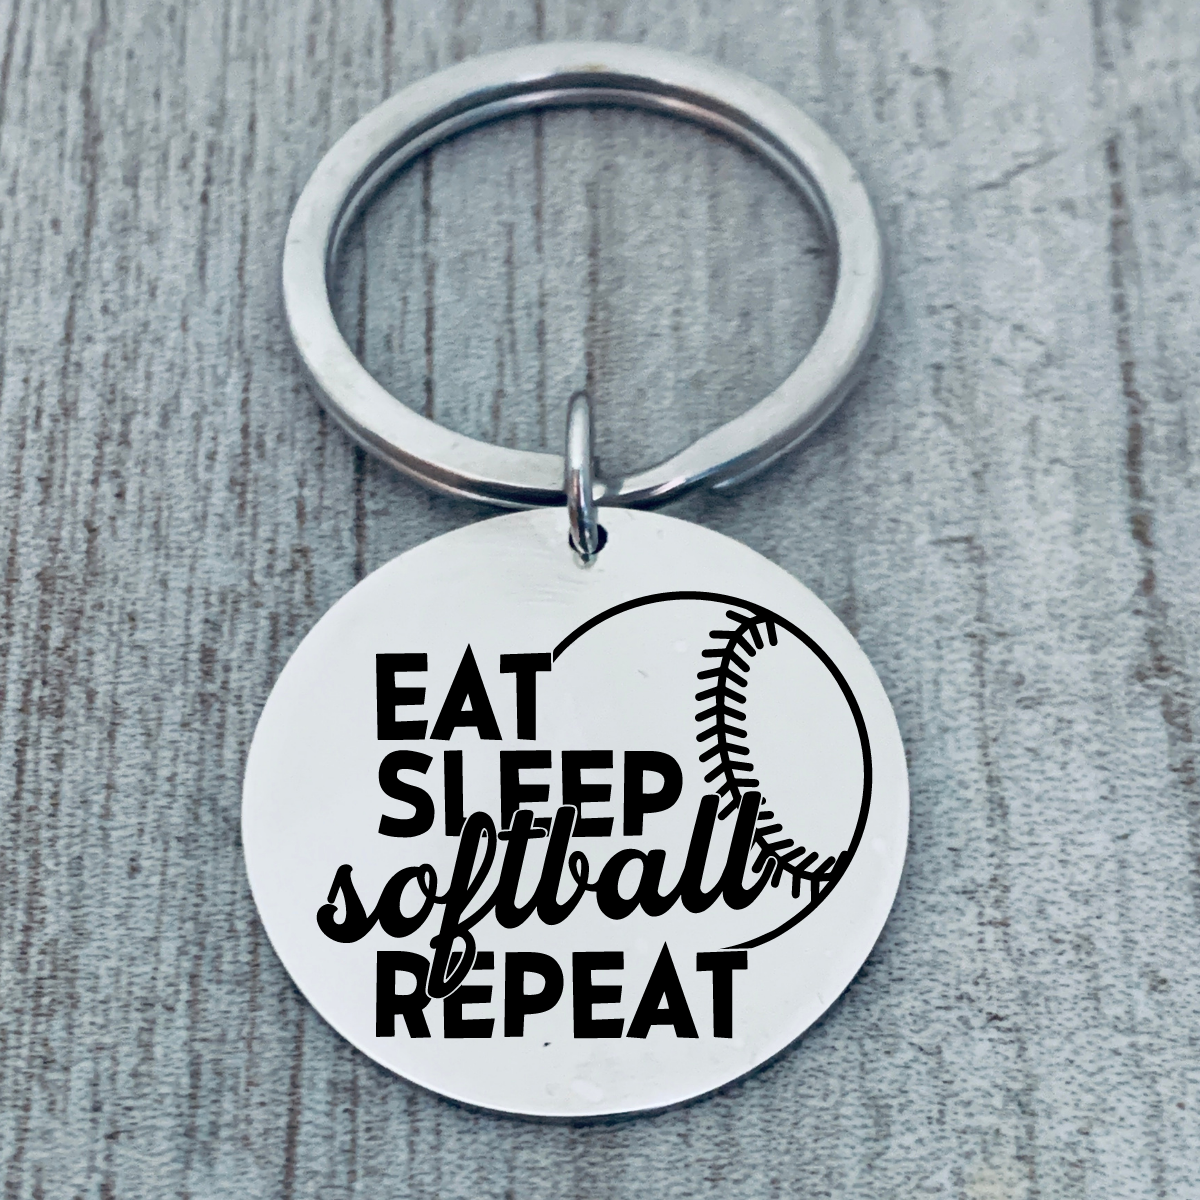 Softball Keychain - Eat, Sleep, Softball Repeat